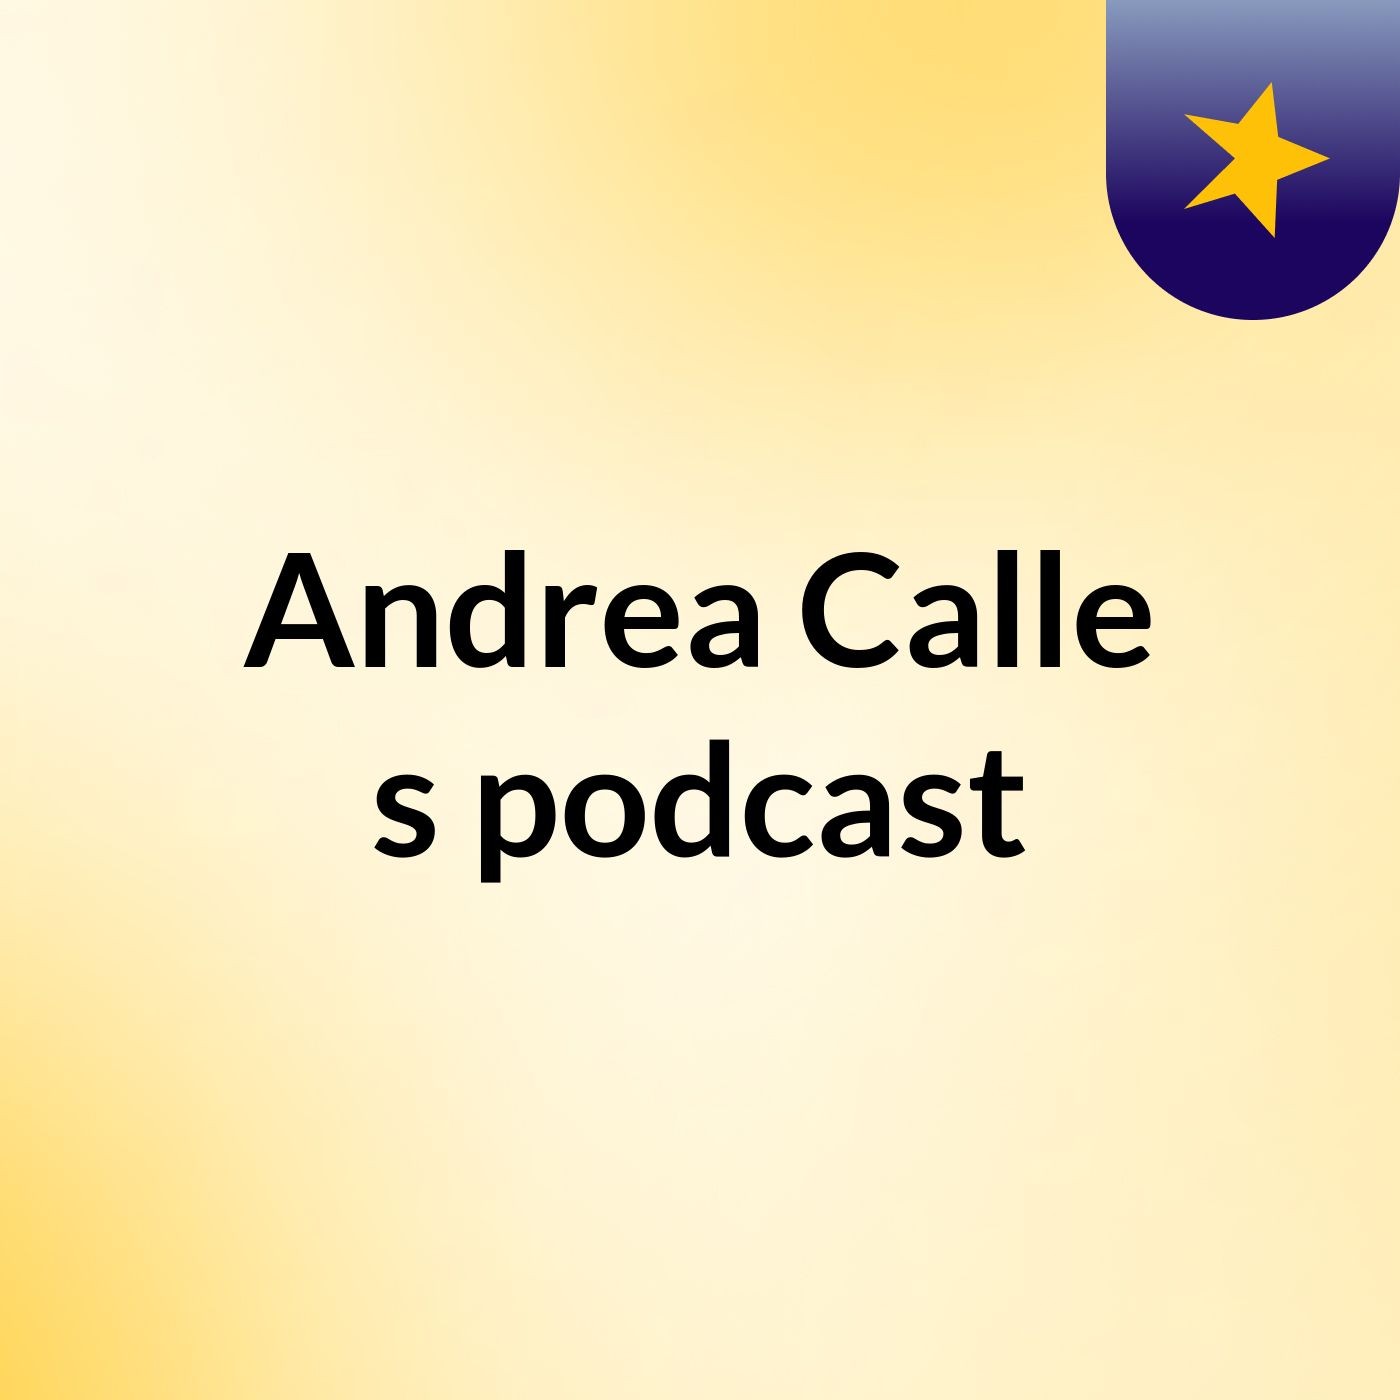 Andrea Calle's podcast